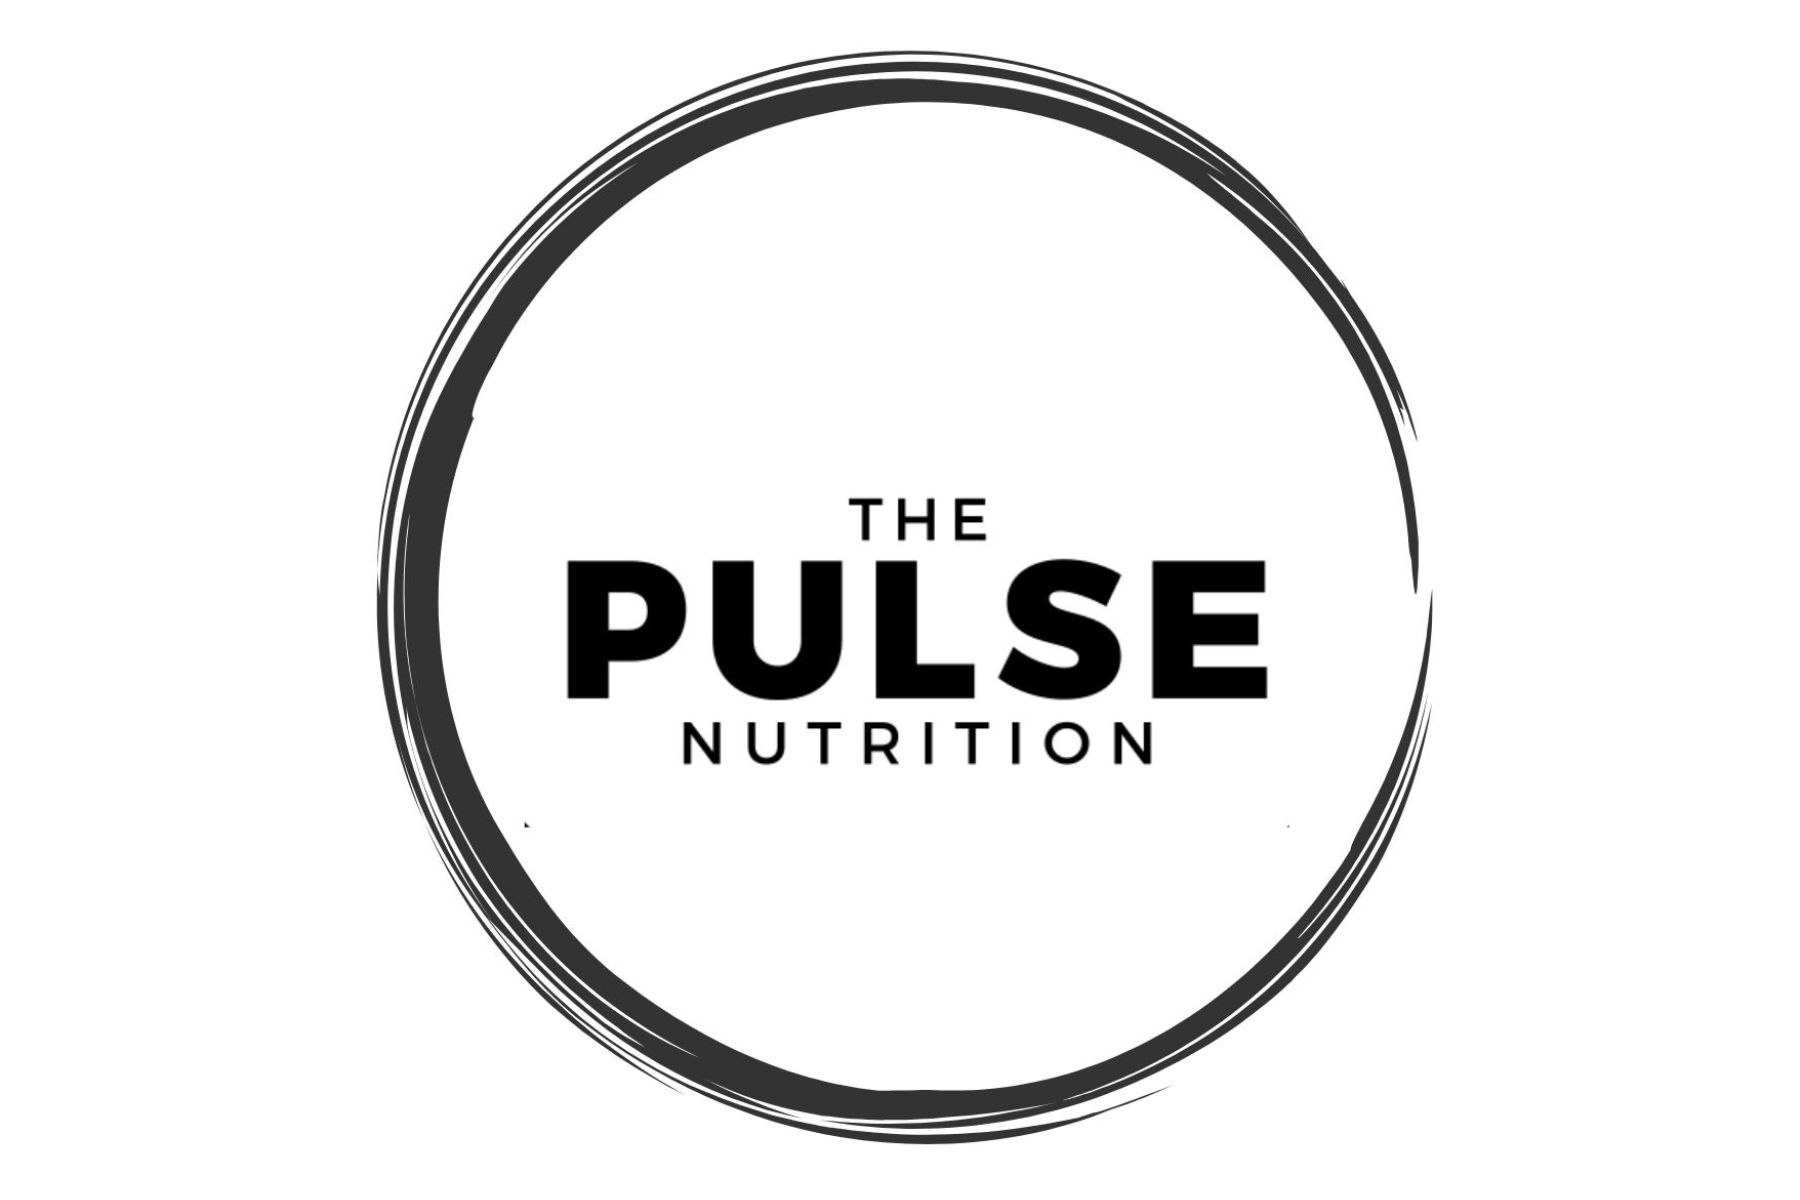 The Pulse Nutrition logo